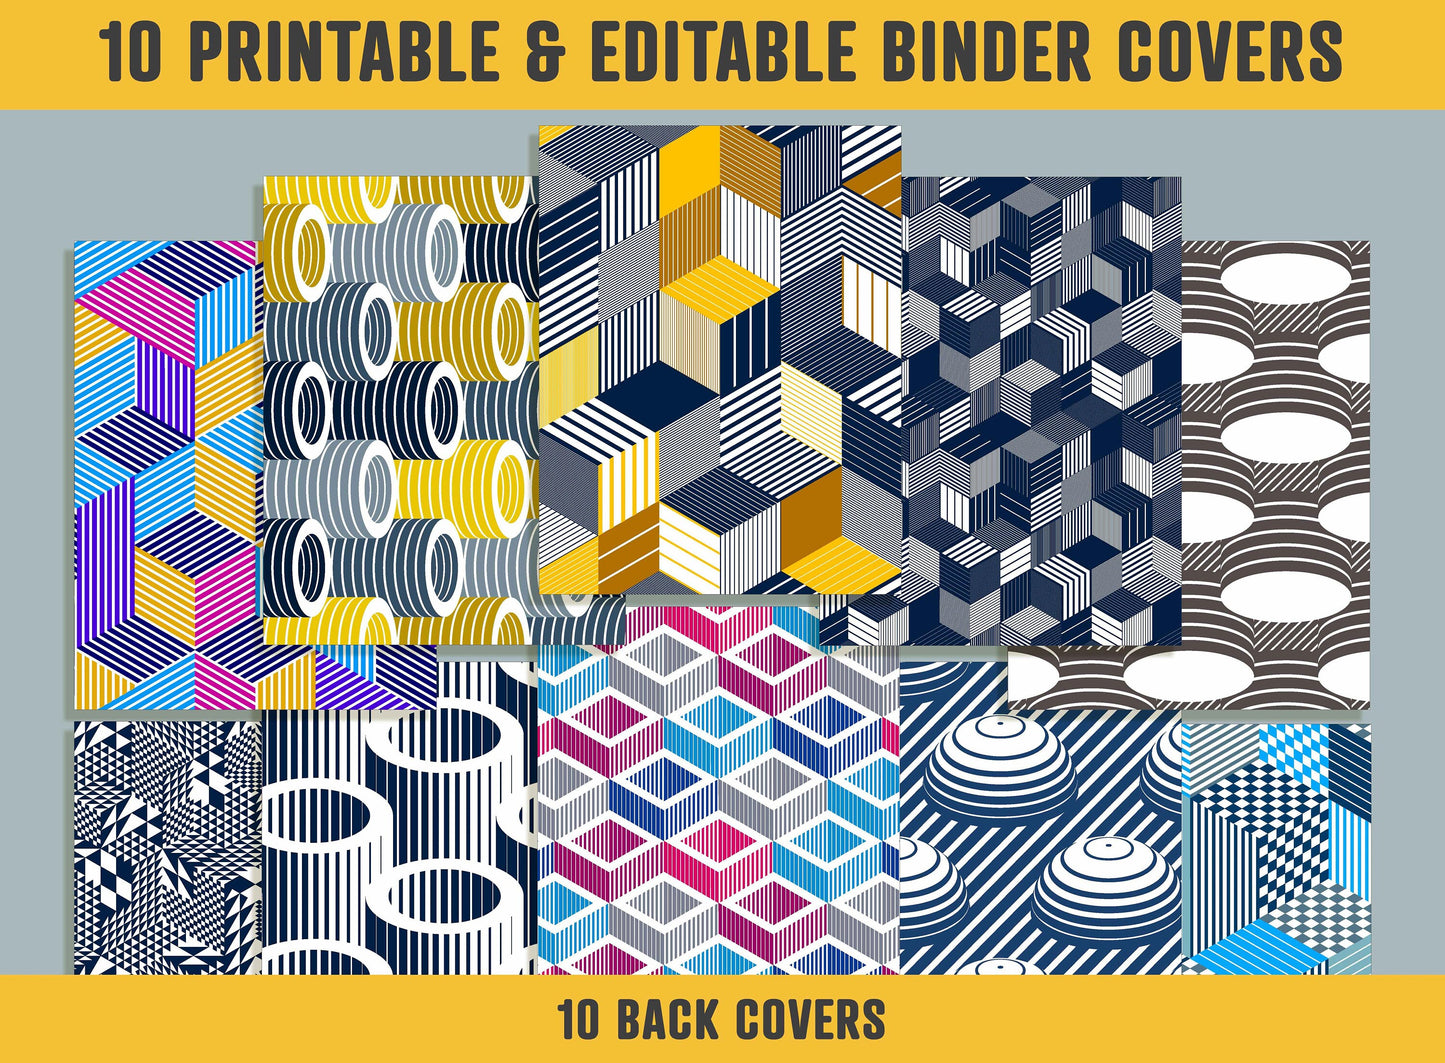 Geometric 3D Binder Cover, 10 Printable/Editable Binder Covers+Spines, Architecture/Box Planner Template, Teacher/School Binder Label/Insert